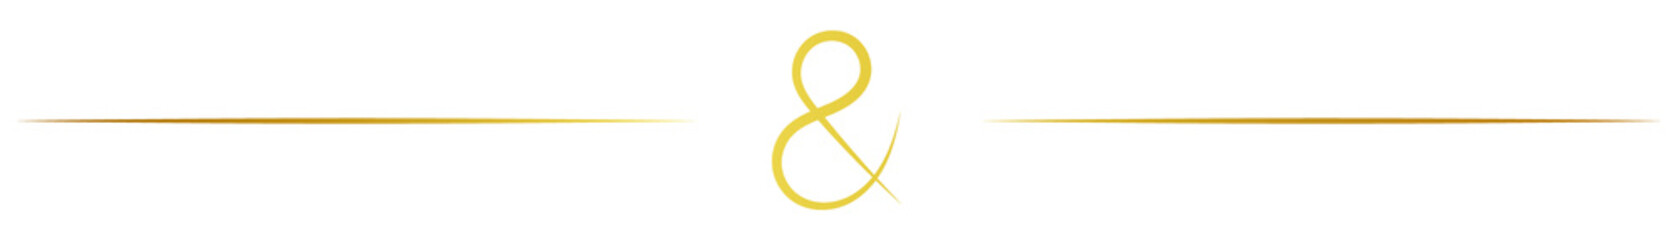 Golden luxury ampersand sign Ampersand border for printing invitations wedding card